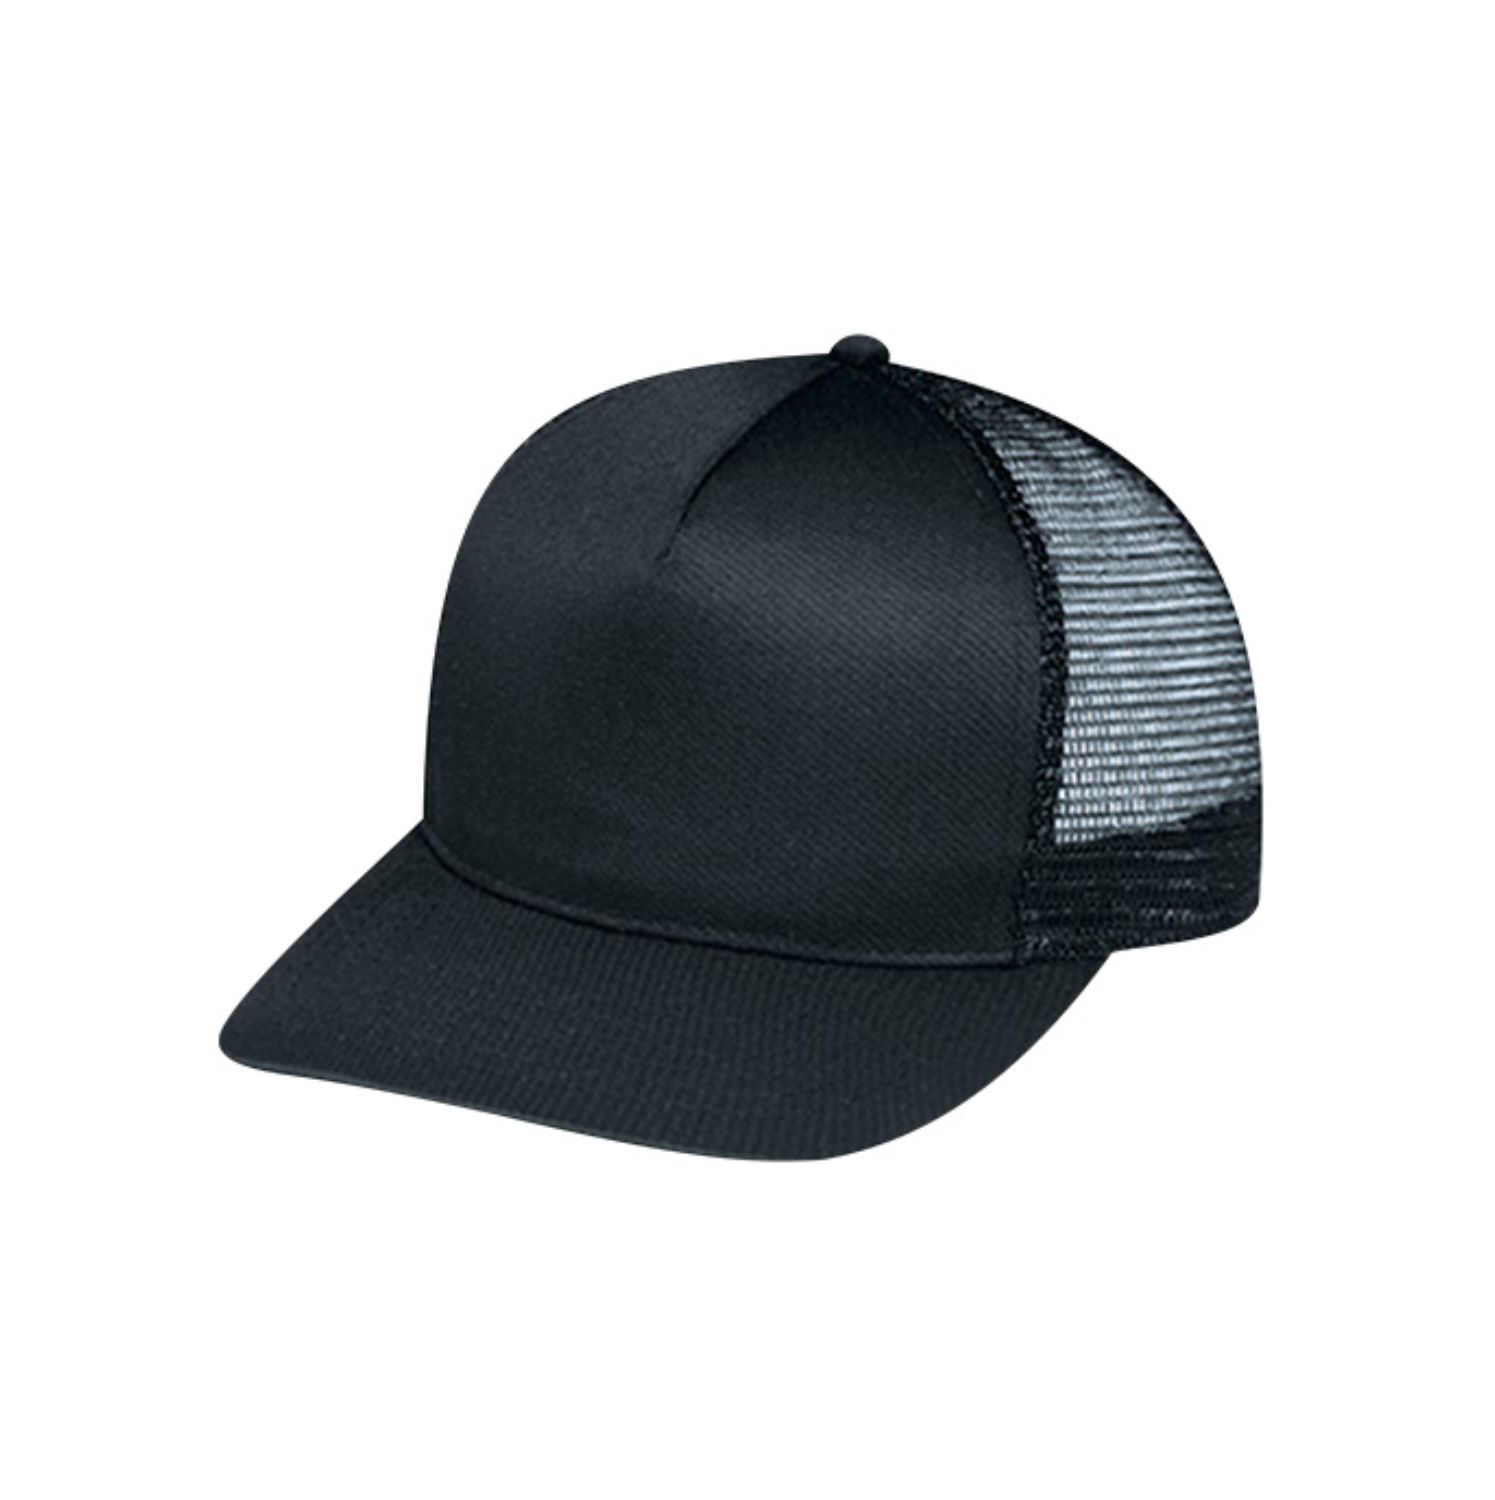 AJM 5-Panel Pro-Look Hat (Mesh Back) #5800M Black